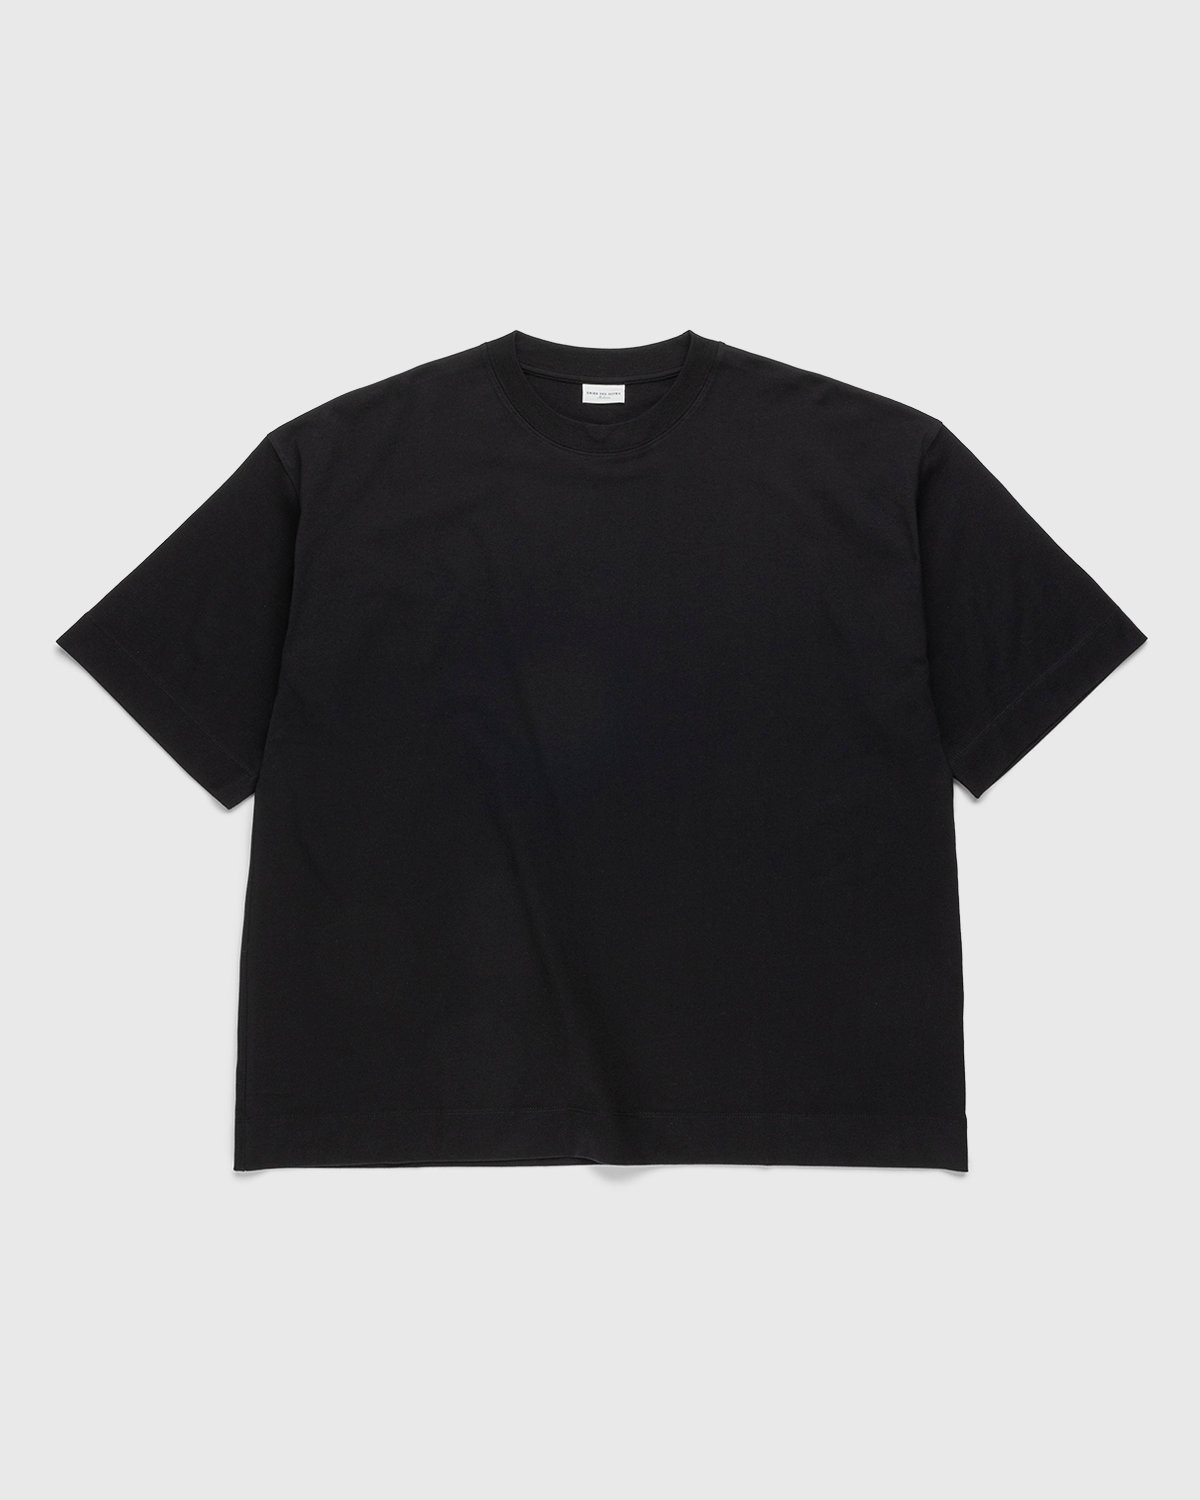 Dries van Noten - Hen Oversized T-Shirt Black - Clothing - Black - Image 1